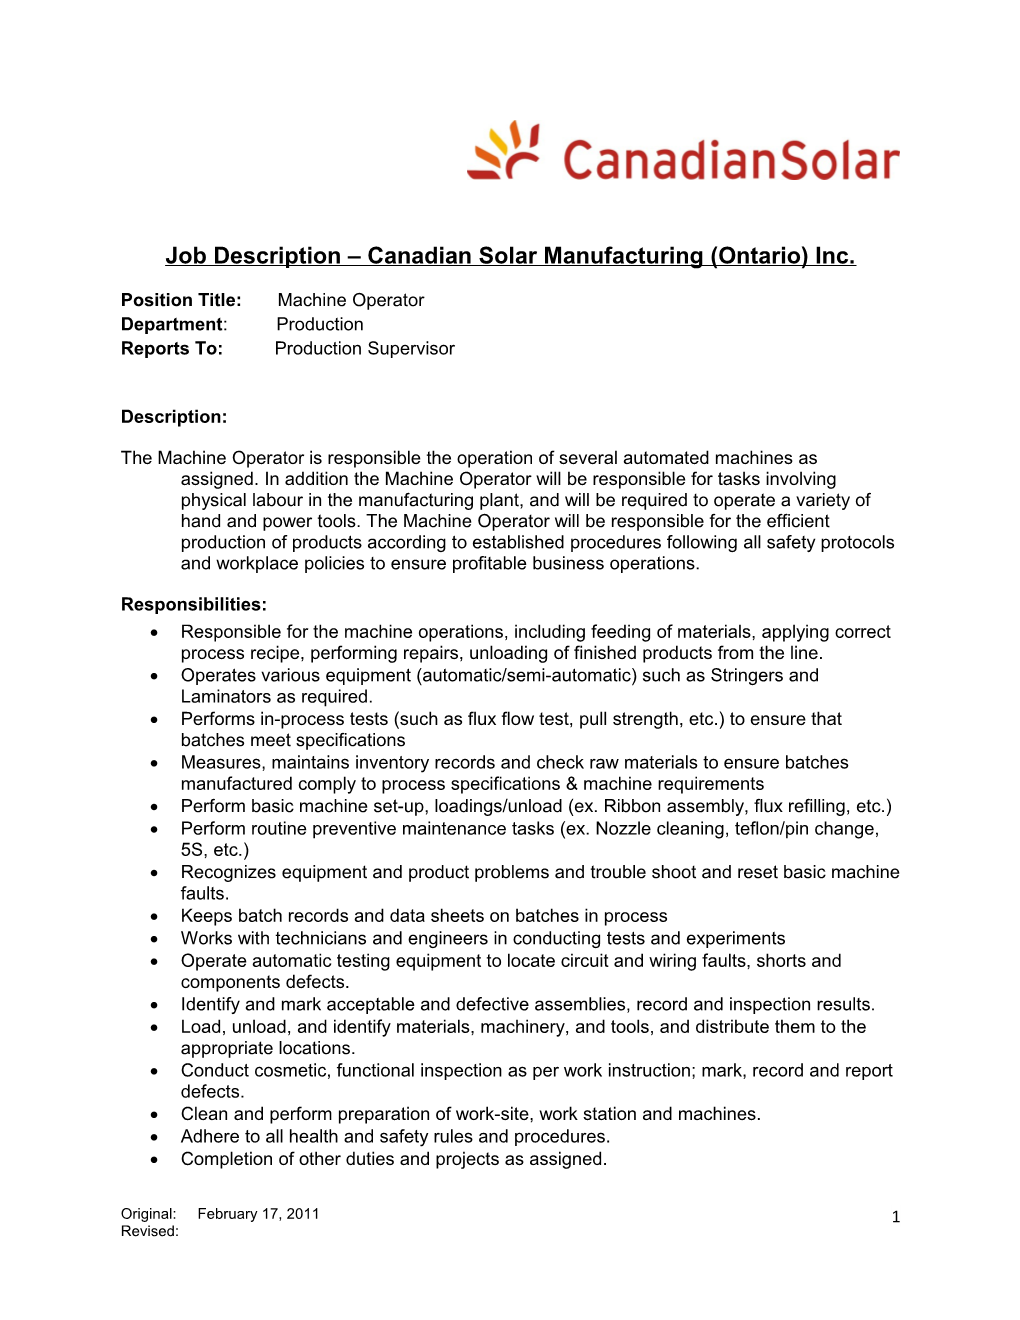 Job Description Canadian Solar Manufacturing (Ontario) Inc